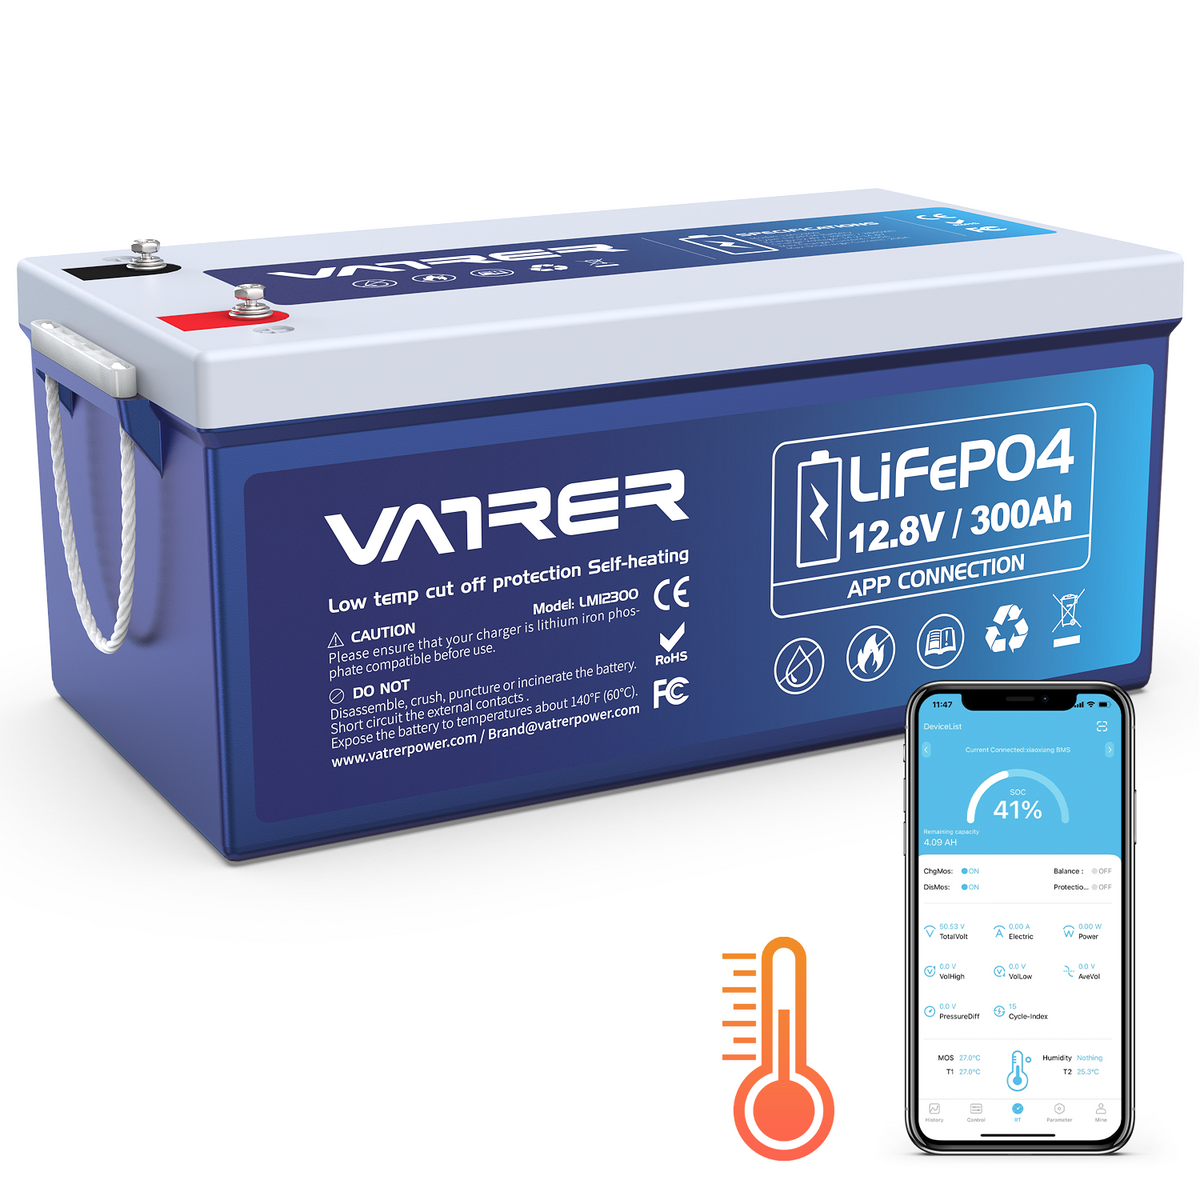 Vatrer 12V 300AH Bluetooth LiFePO4 Lithium Self-Heating Battery CA